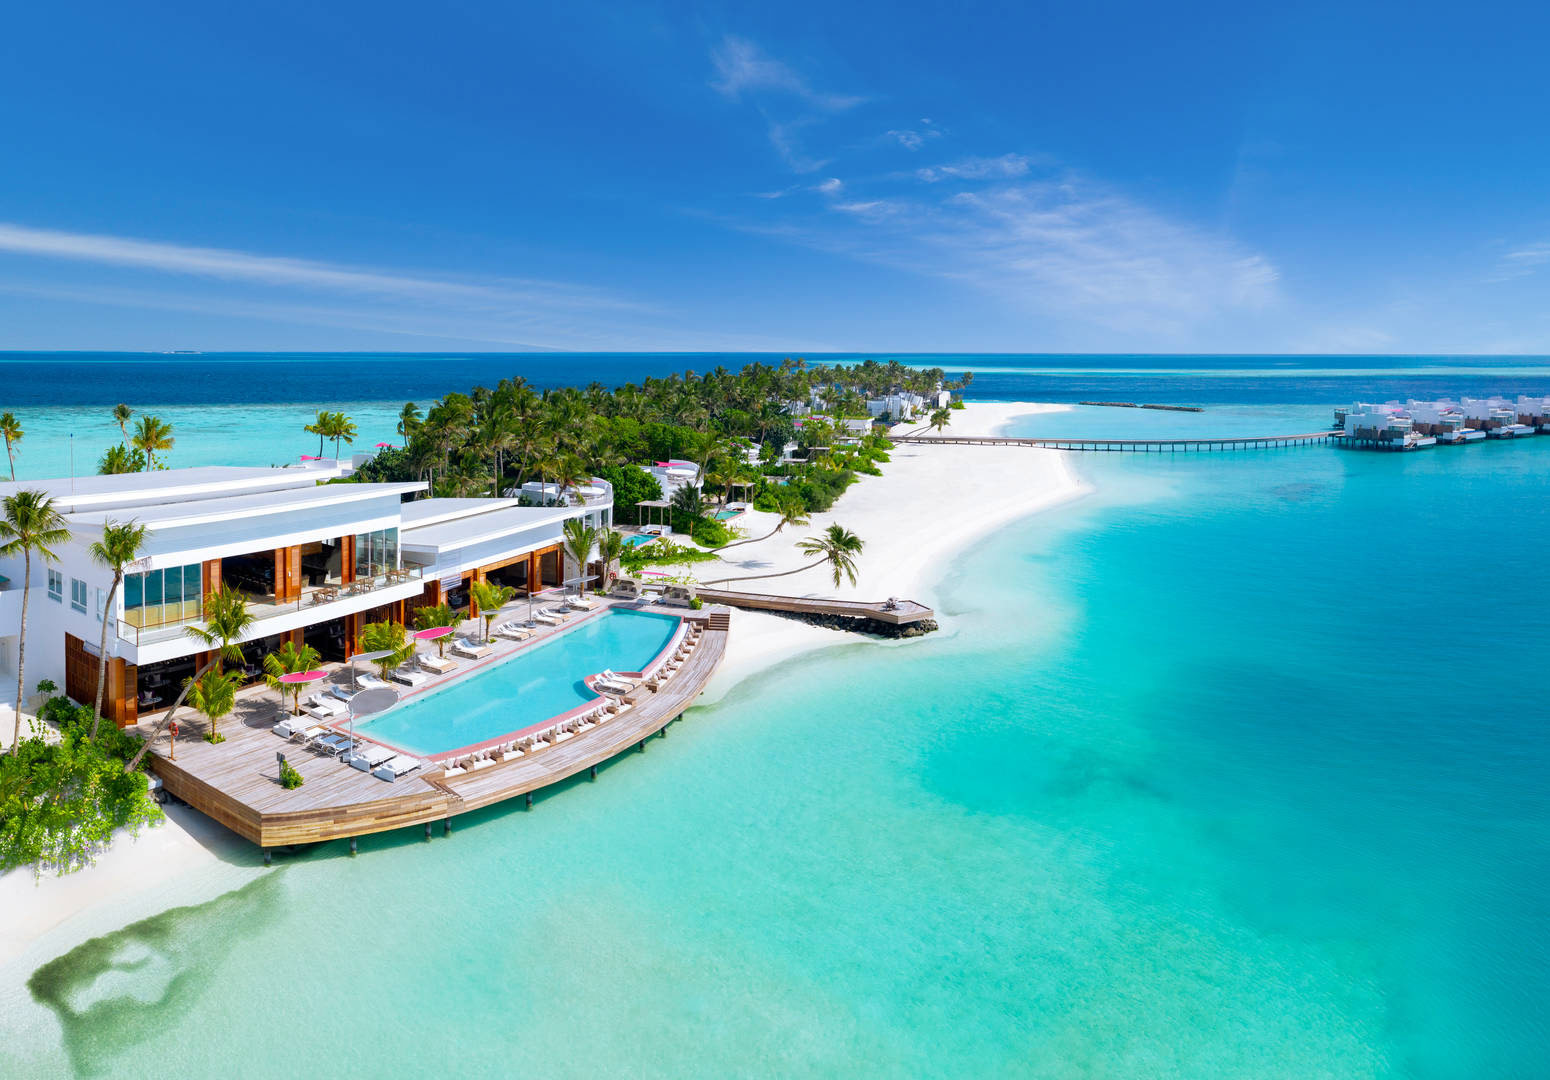 Jumeirah Maldives, Olhahali Island 
Best Maldives resort 2023 Nominee